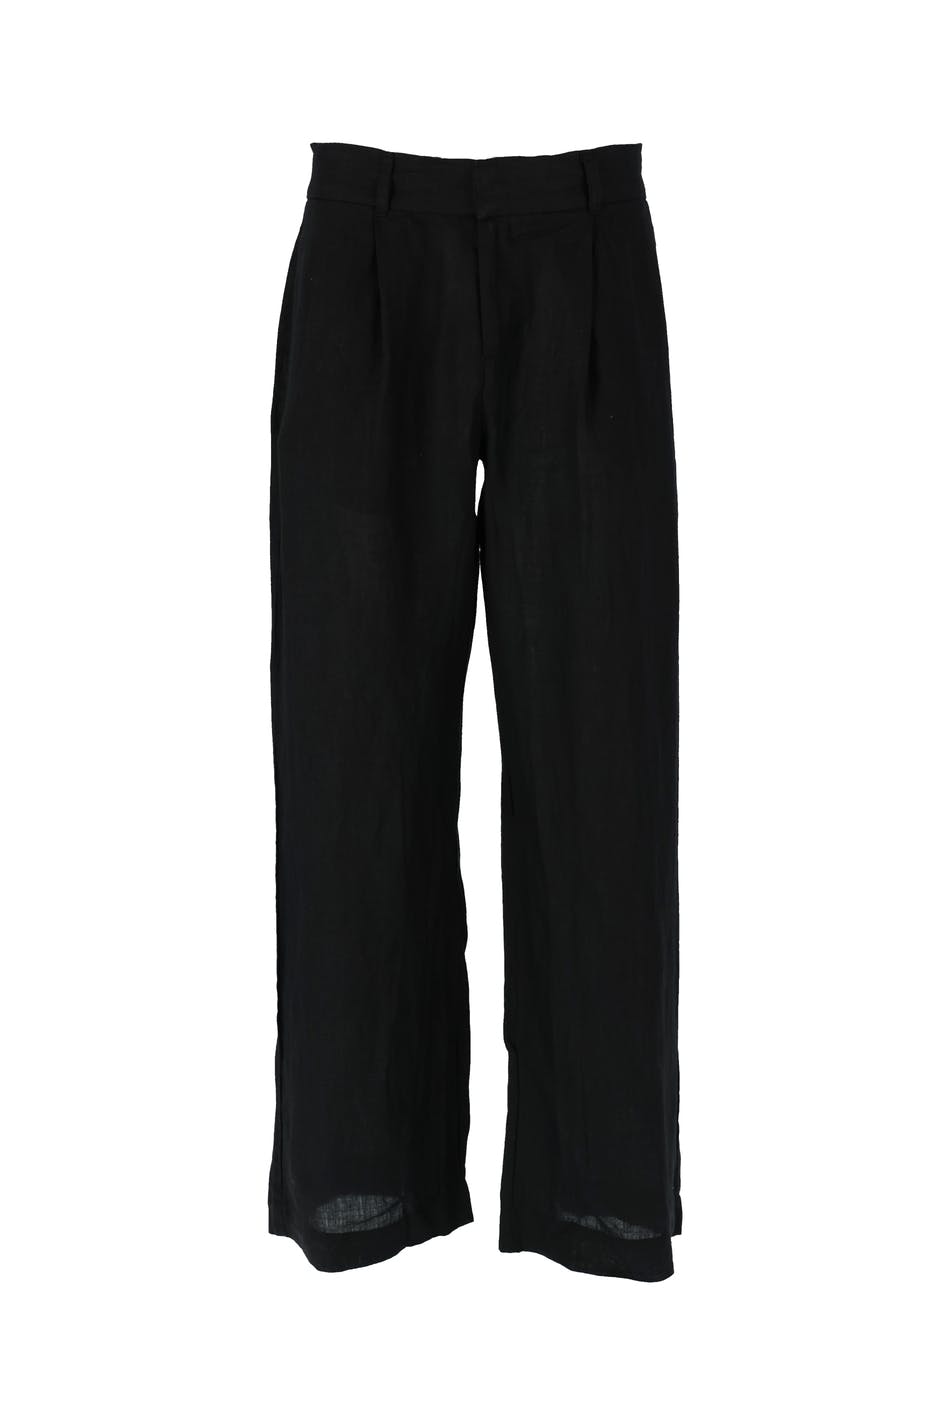 Gina Tricot - Petite linen trousers - linnebyxor - Black - S - Female